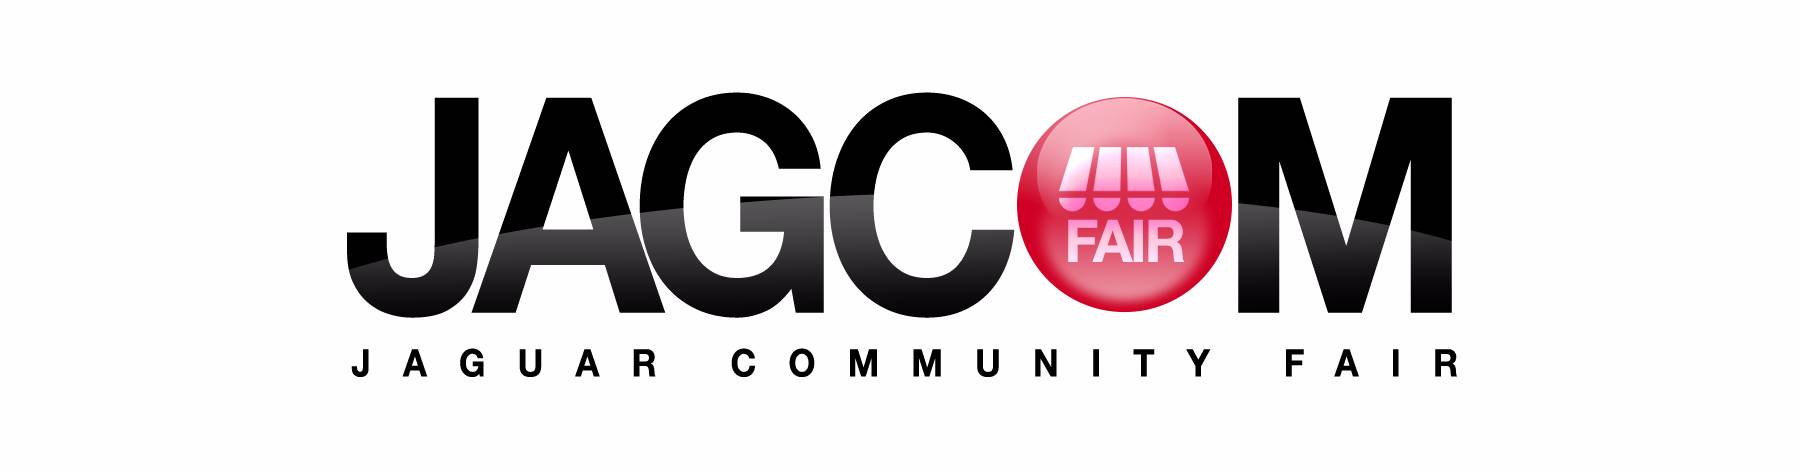 JAG COM logo for Jaguar Community Fair